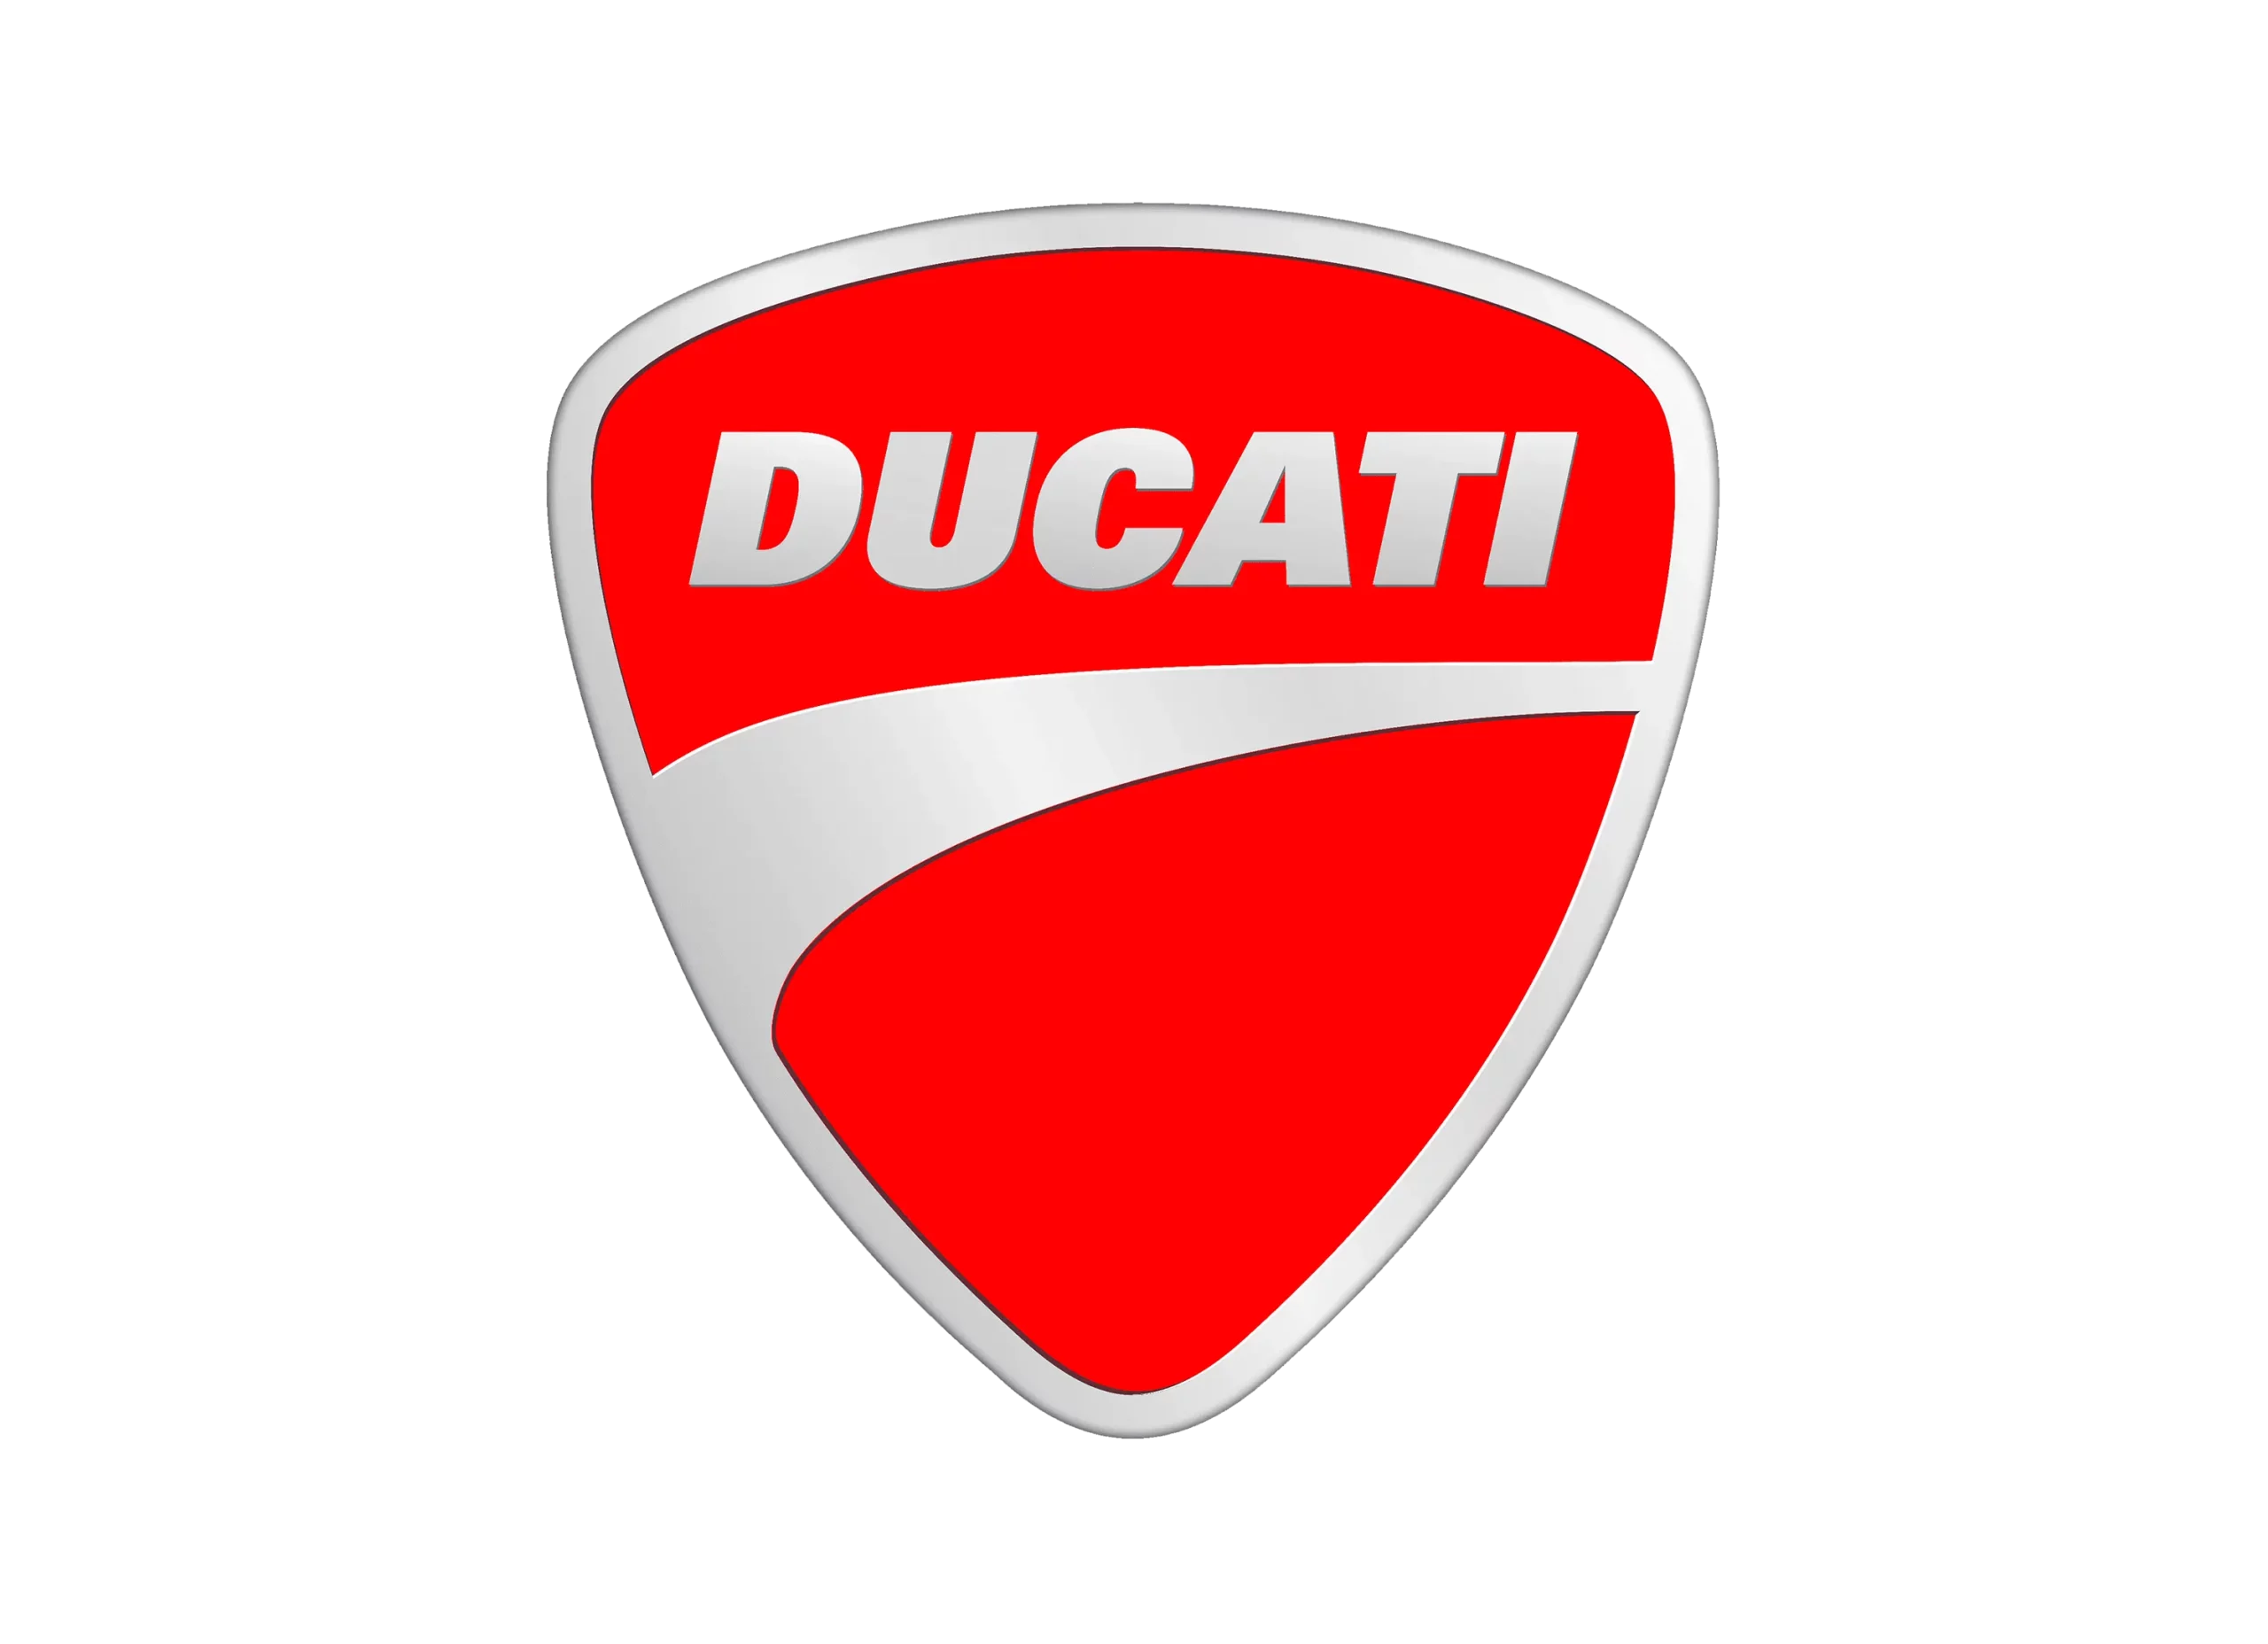 Ducati logo 2009-present